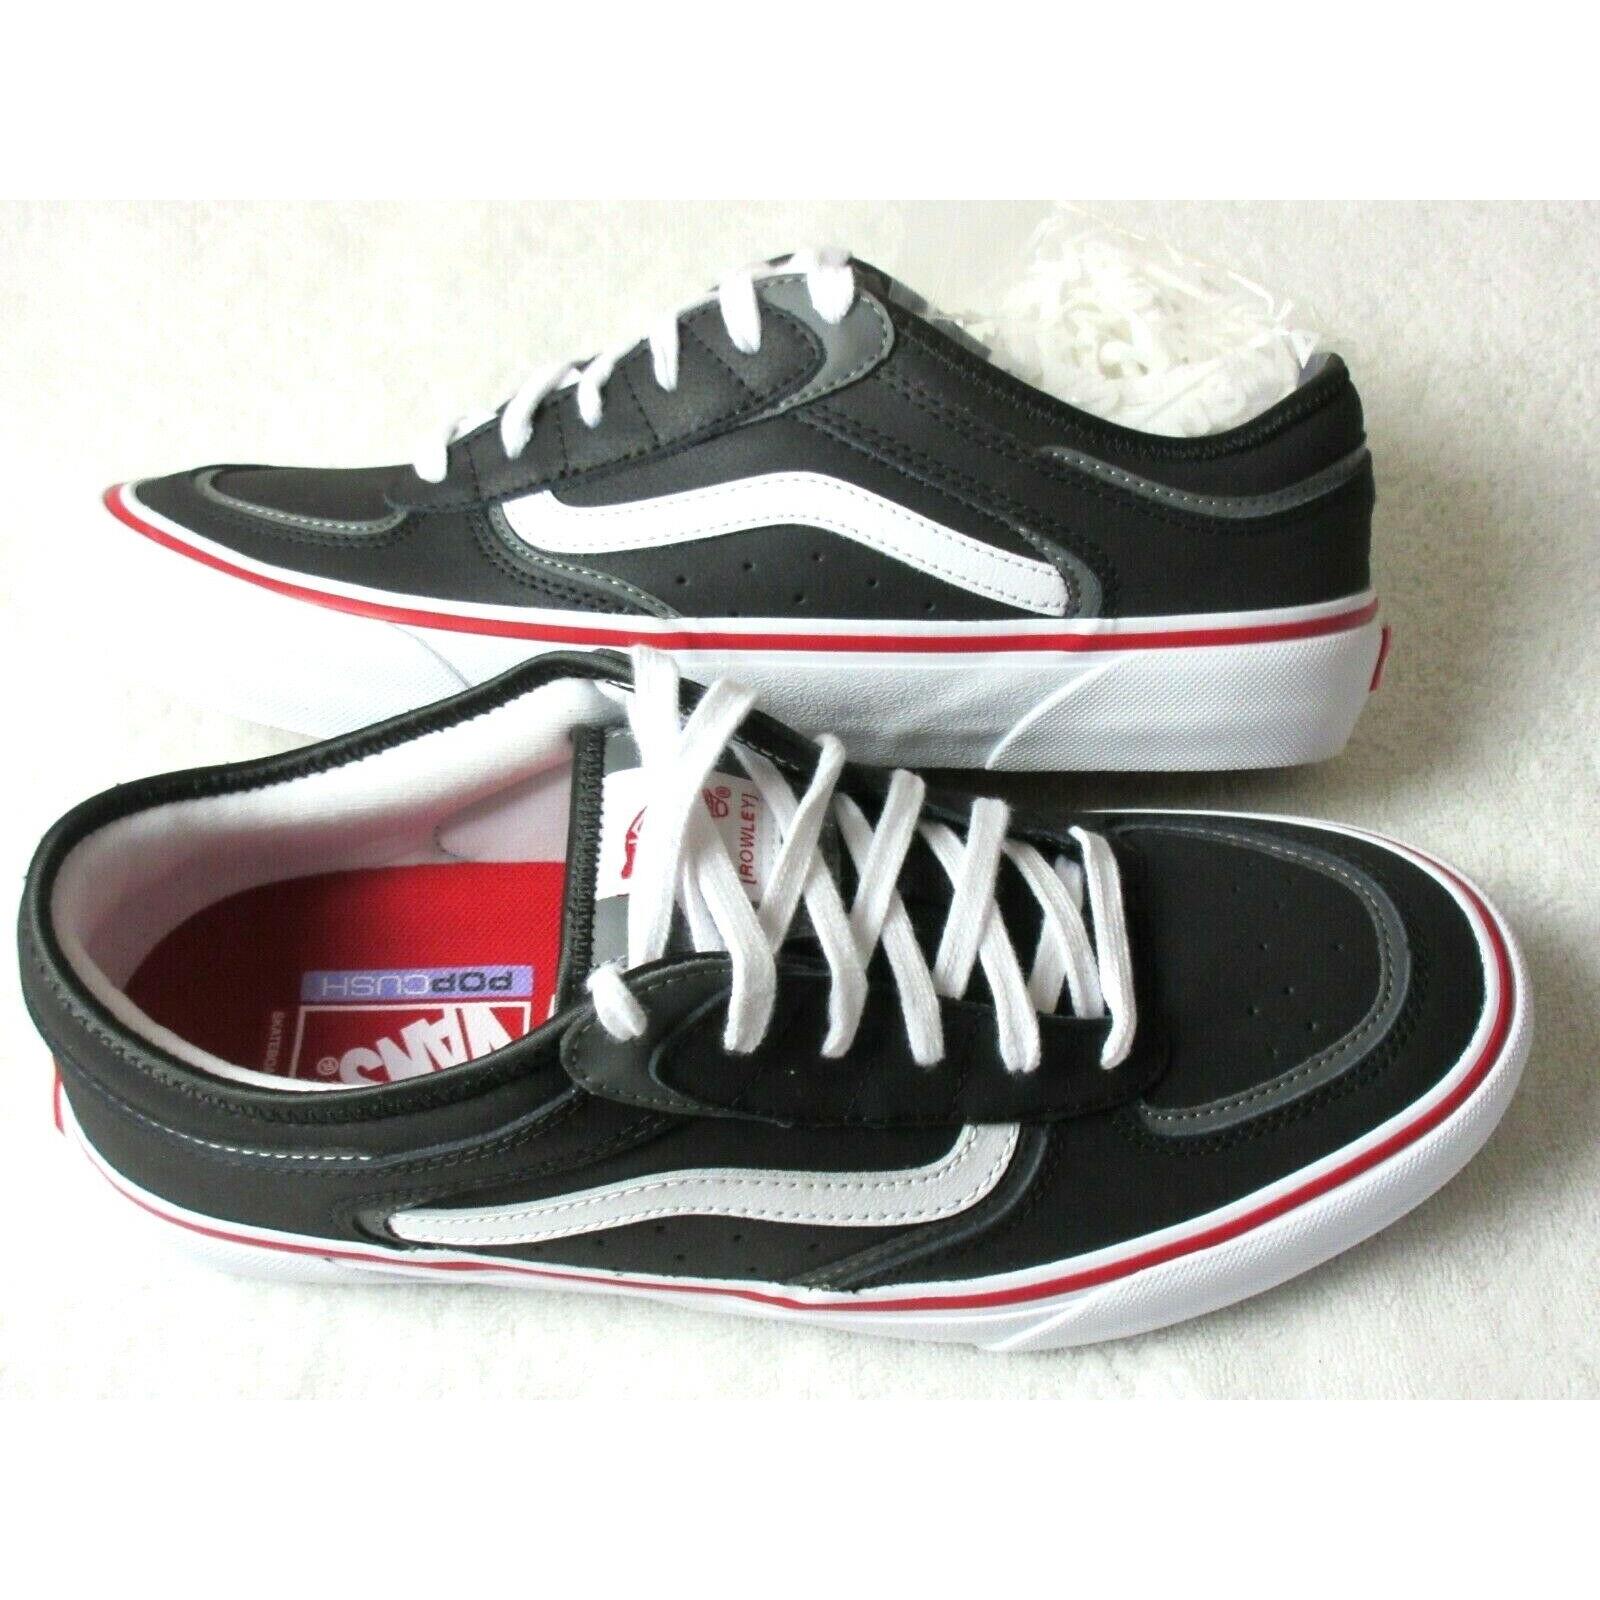 Vans Men`s Rowley Popcush Skate Shoes Black White Red Size 8